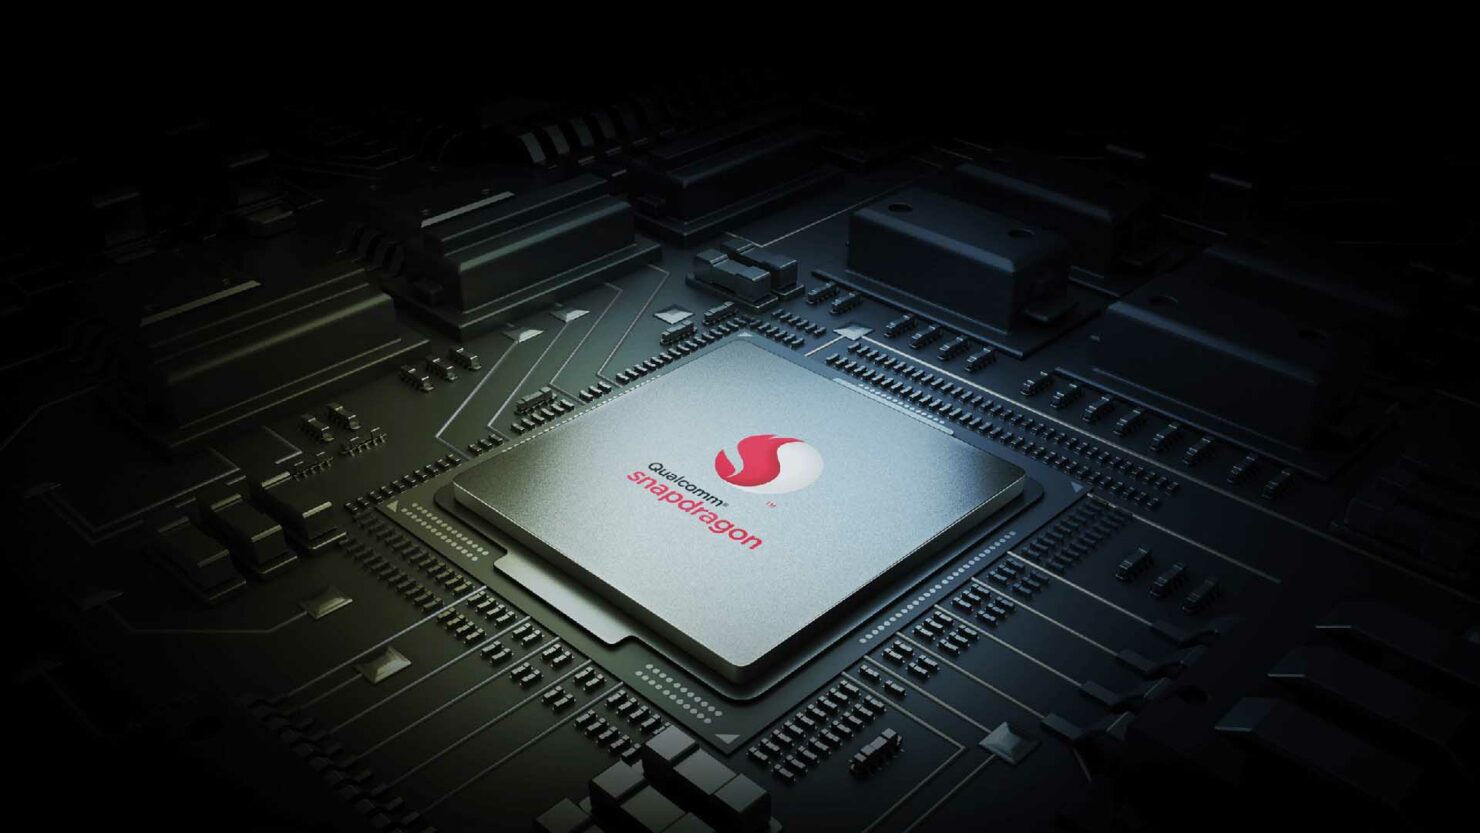 Procesor Snapdragon 8 Gen1 bije rekord Dimensity 9000 w AnTuTu - ponad 1 milion punktów!